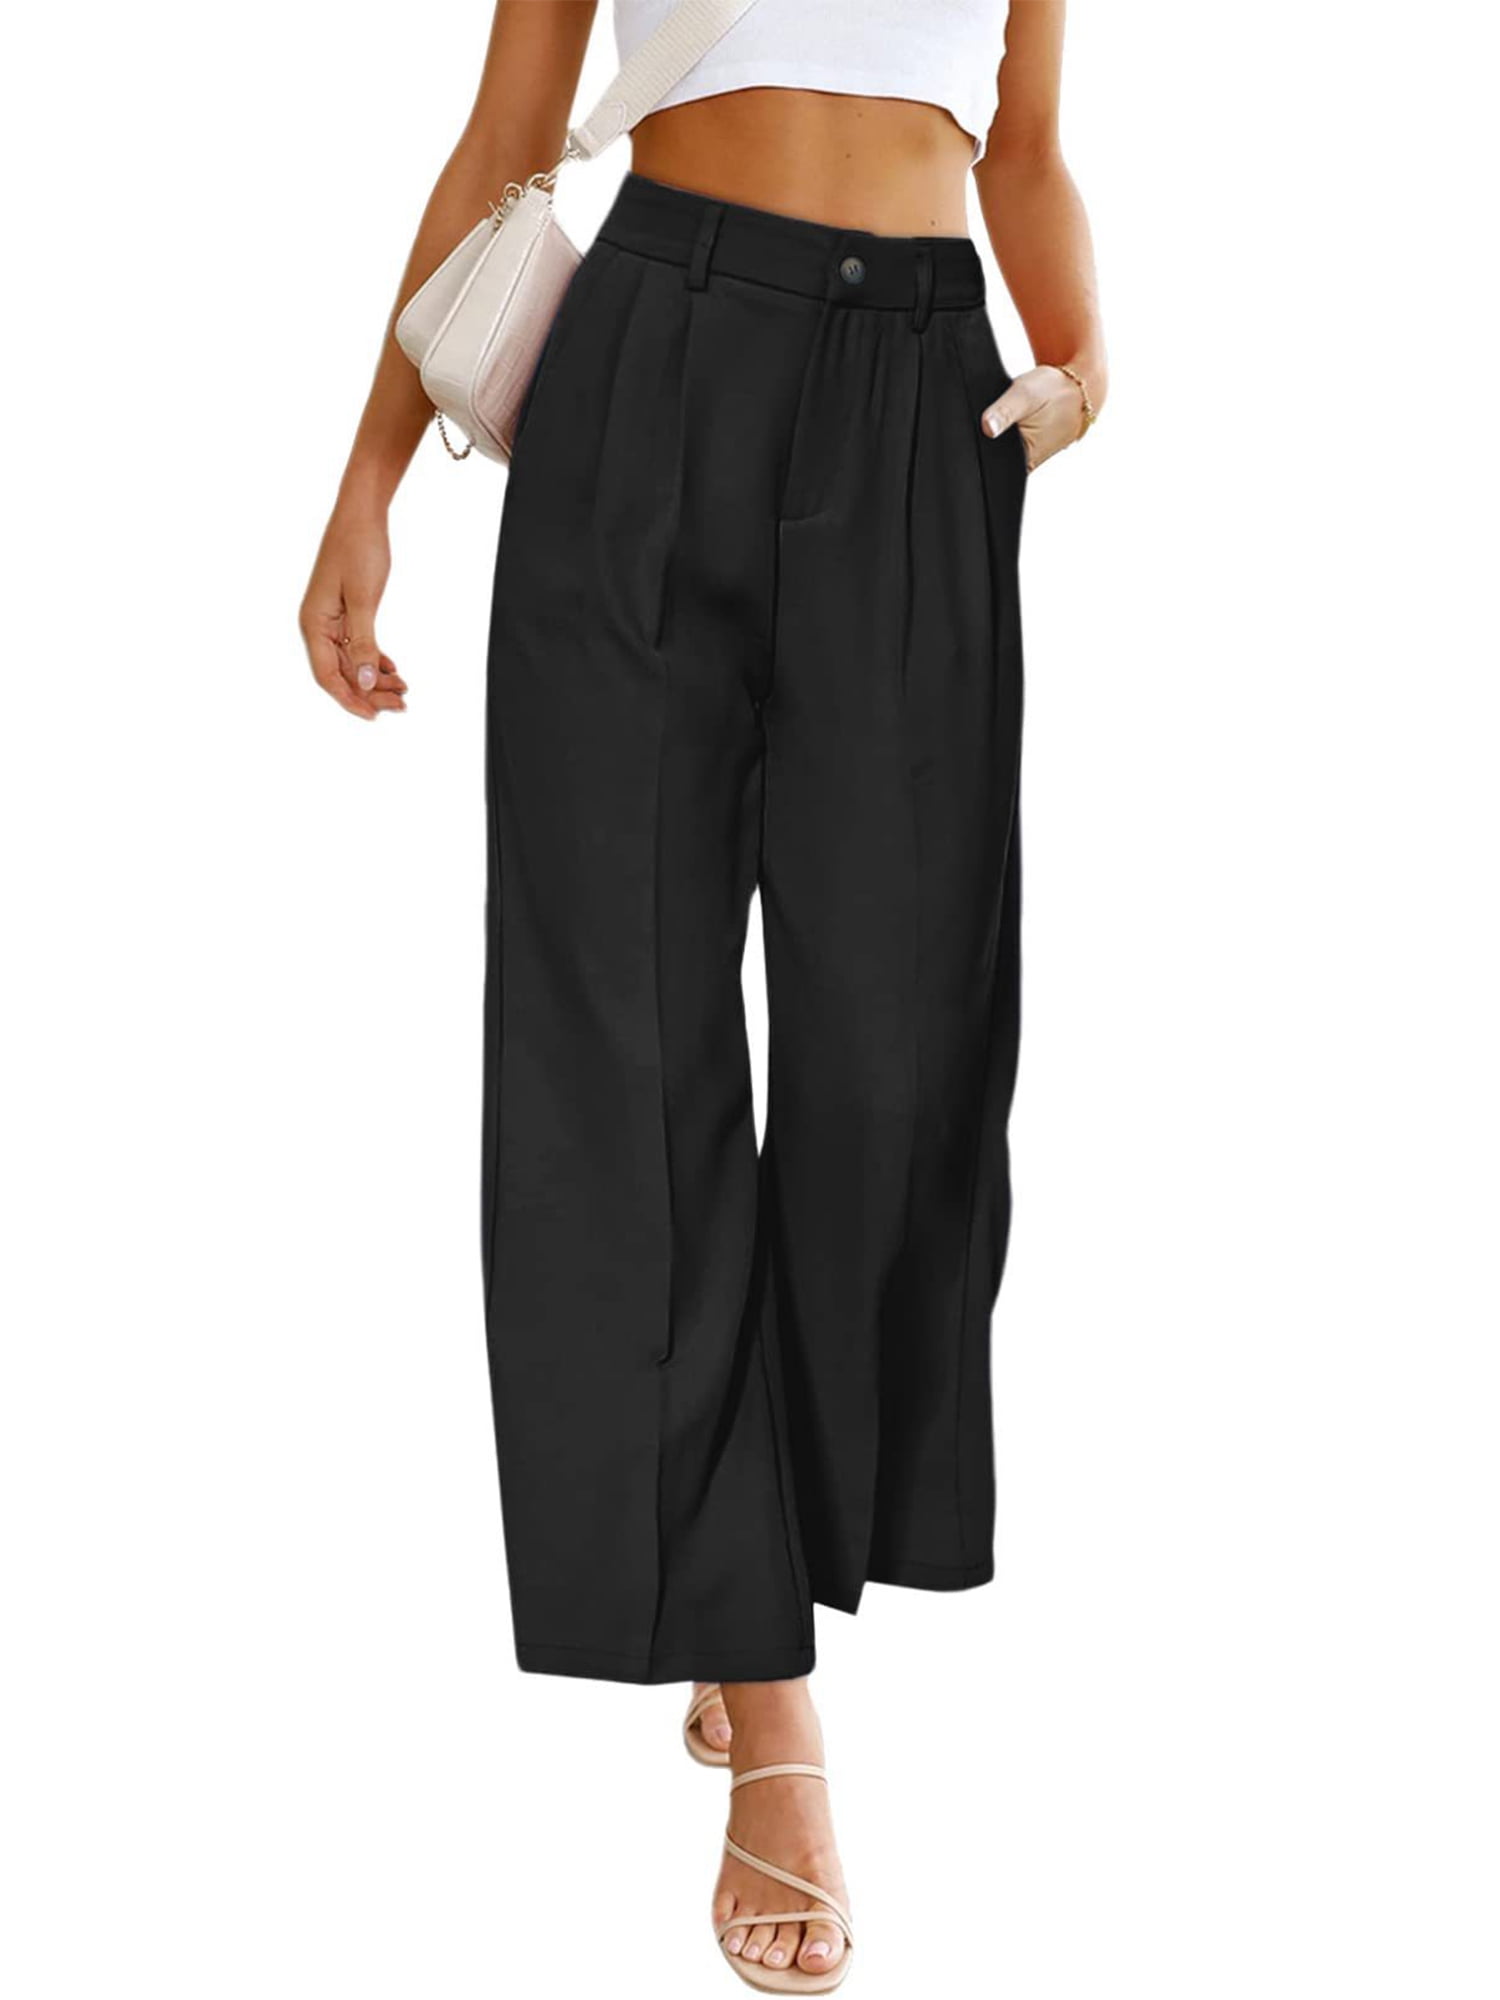 Women's Dress Pants Pants Trousers Green Mid Waist Fashion Streetwear Work  Daily Side Pockets Micro-elastic Ankle-Length Comfort Plain S M L XL 2024 -  $20.99 | Urban fashion, Slim fit pants, Suits for women